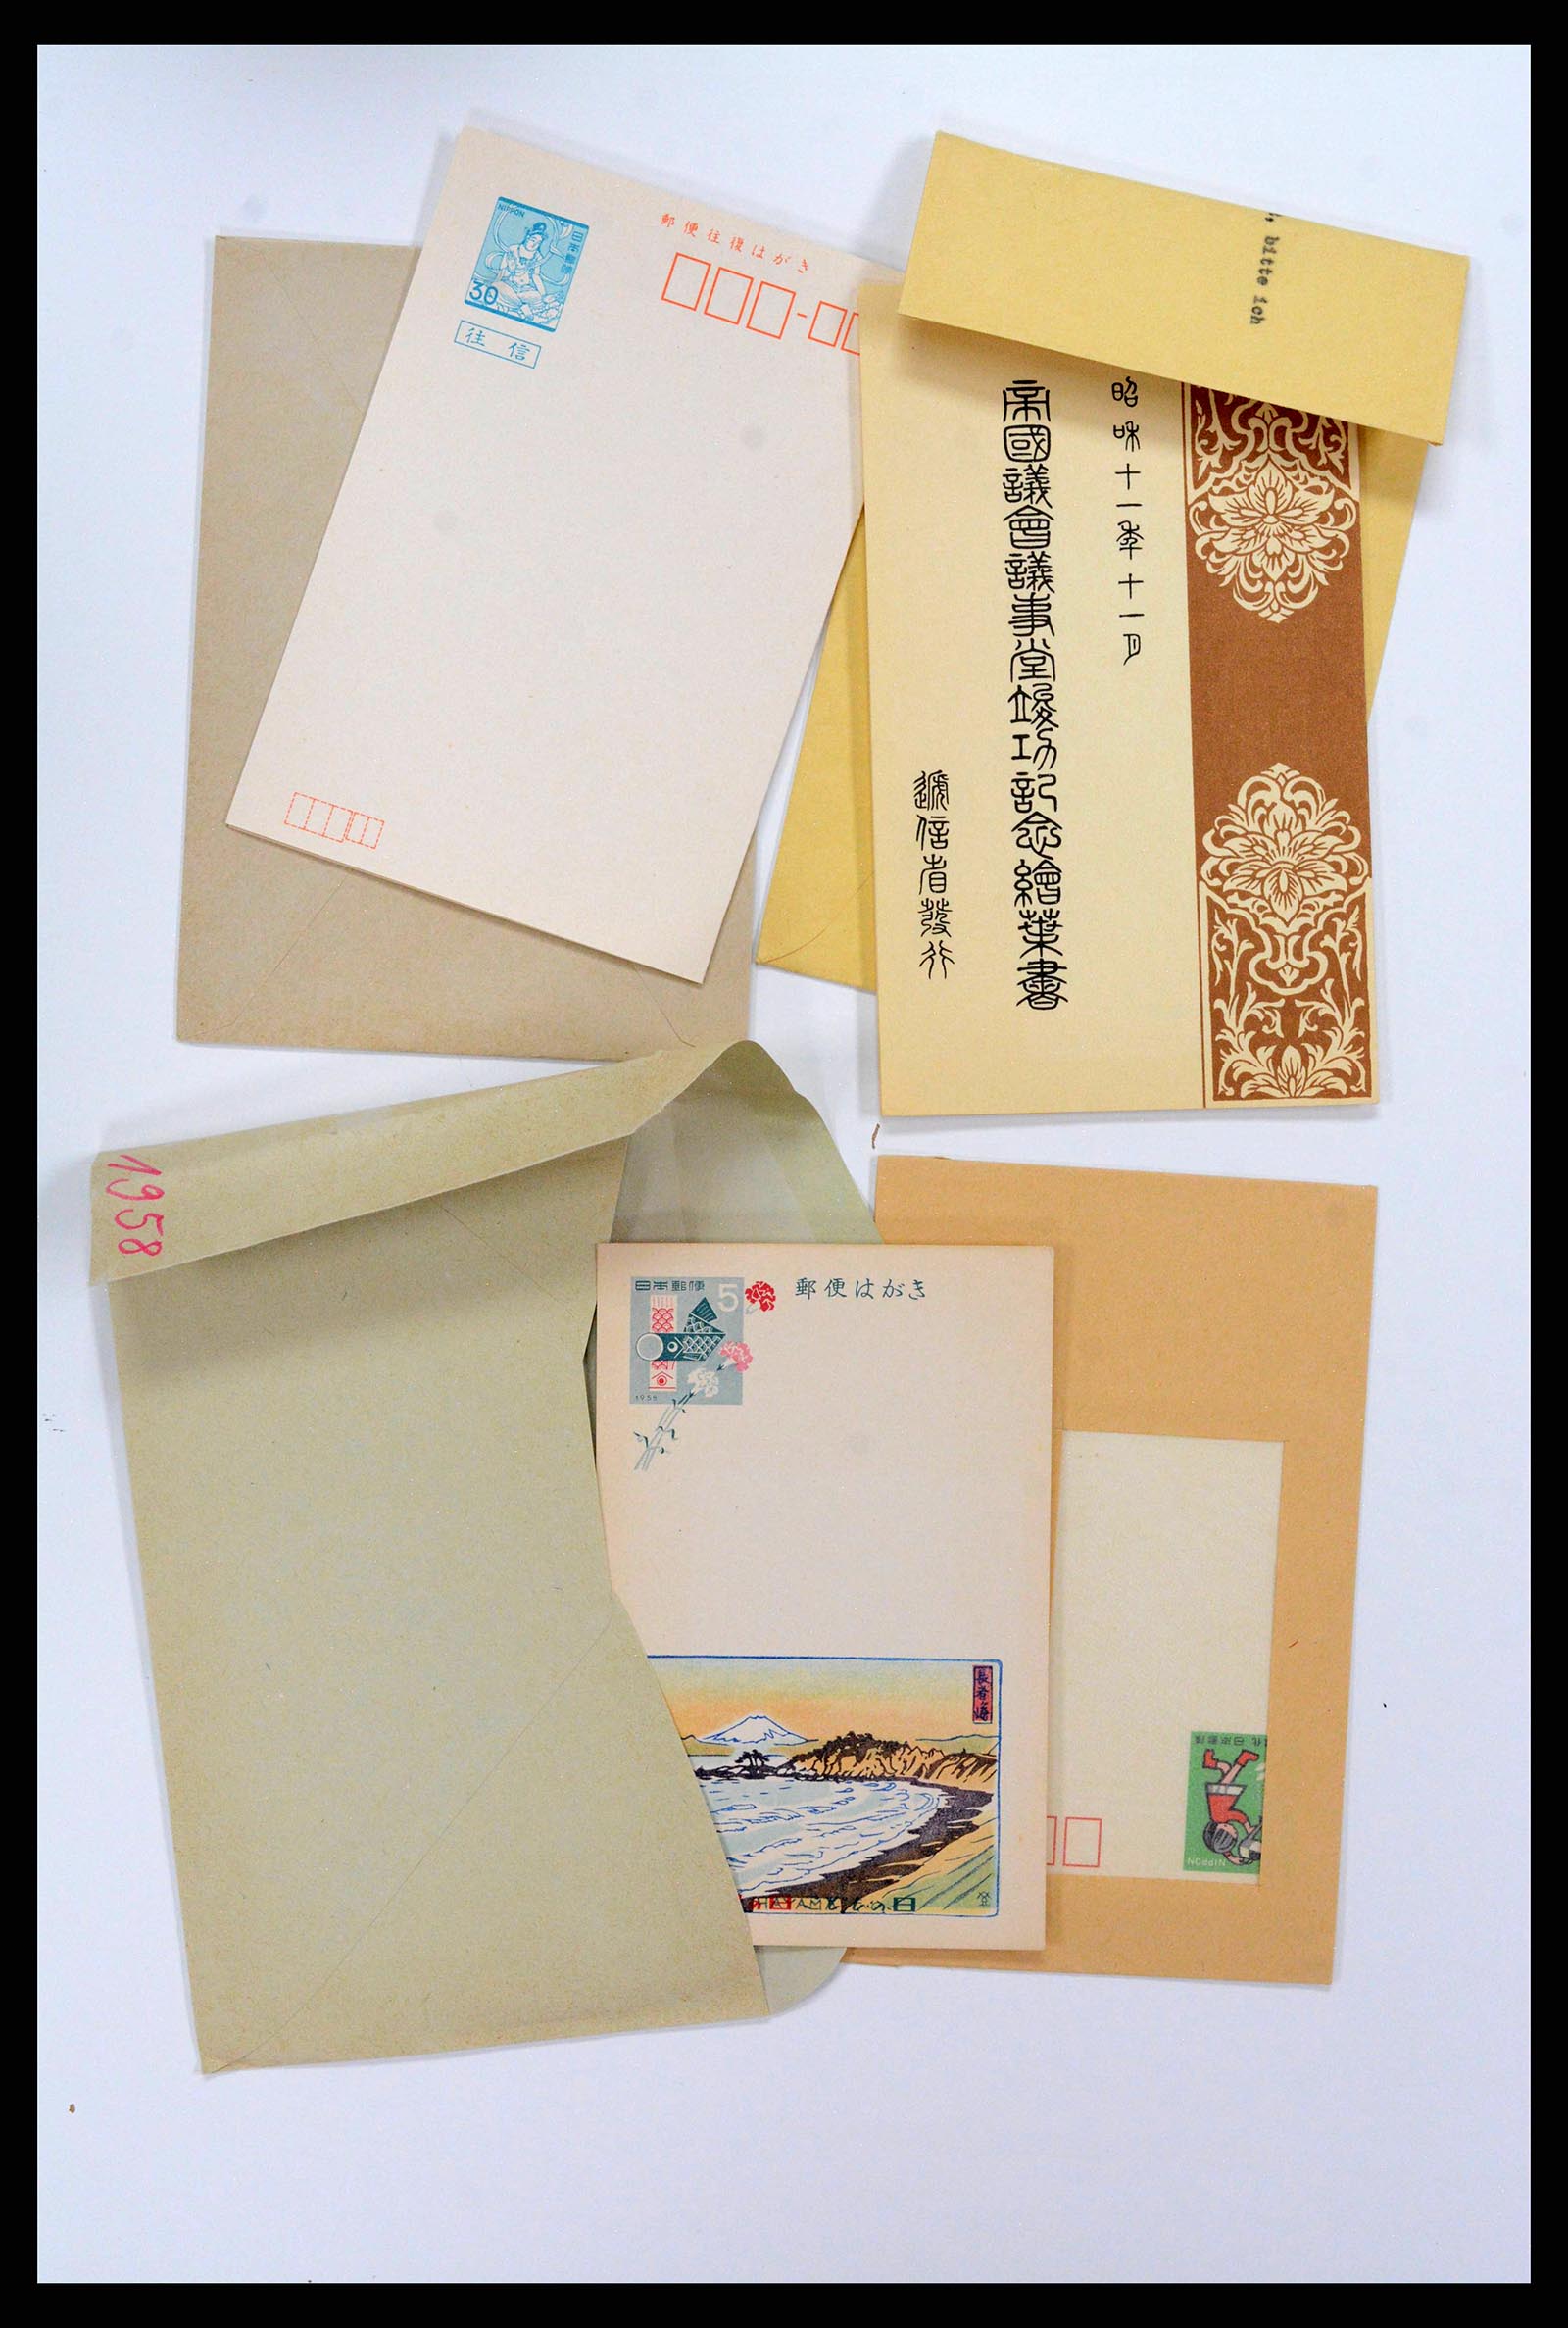 38217 0047 - Stamp collection 38217 Japan postal stationeries 1949-2018.